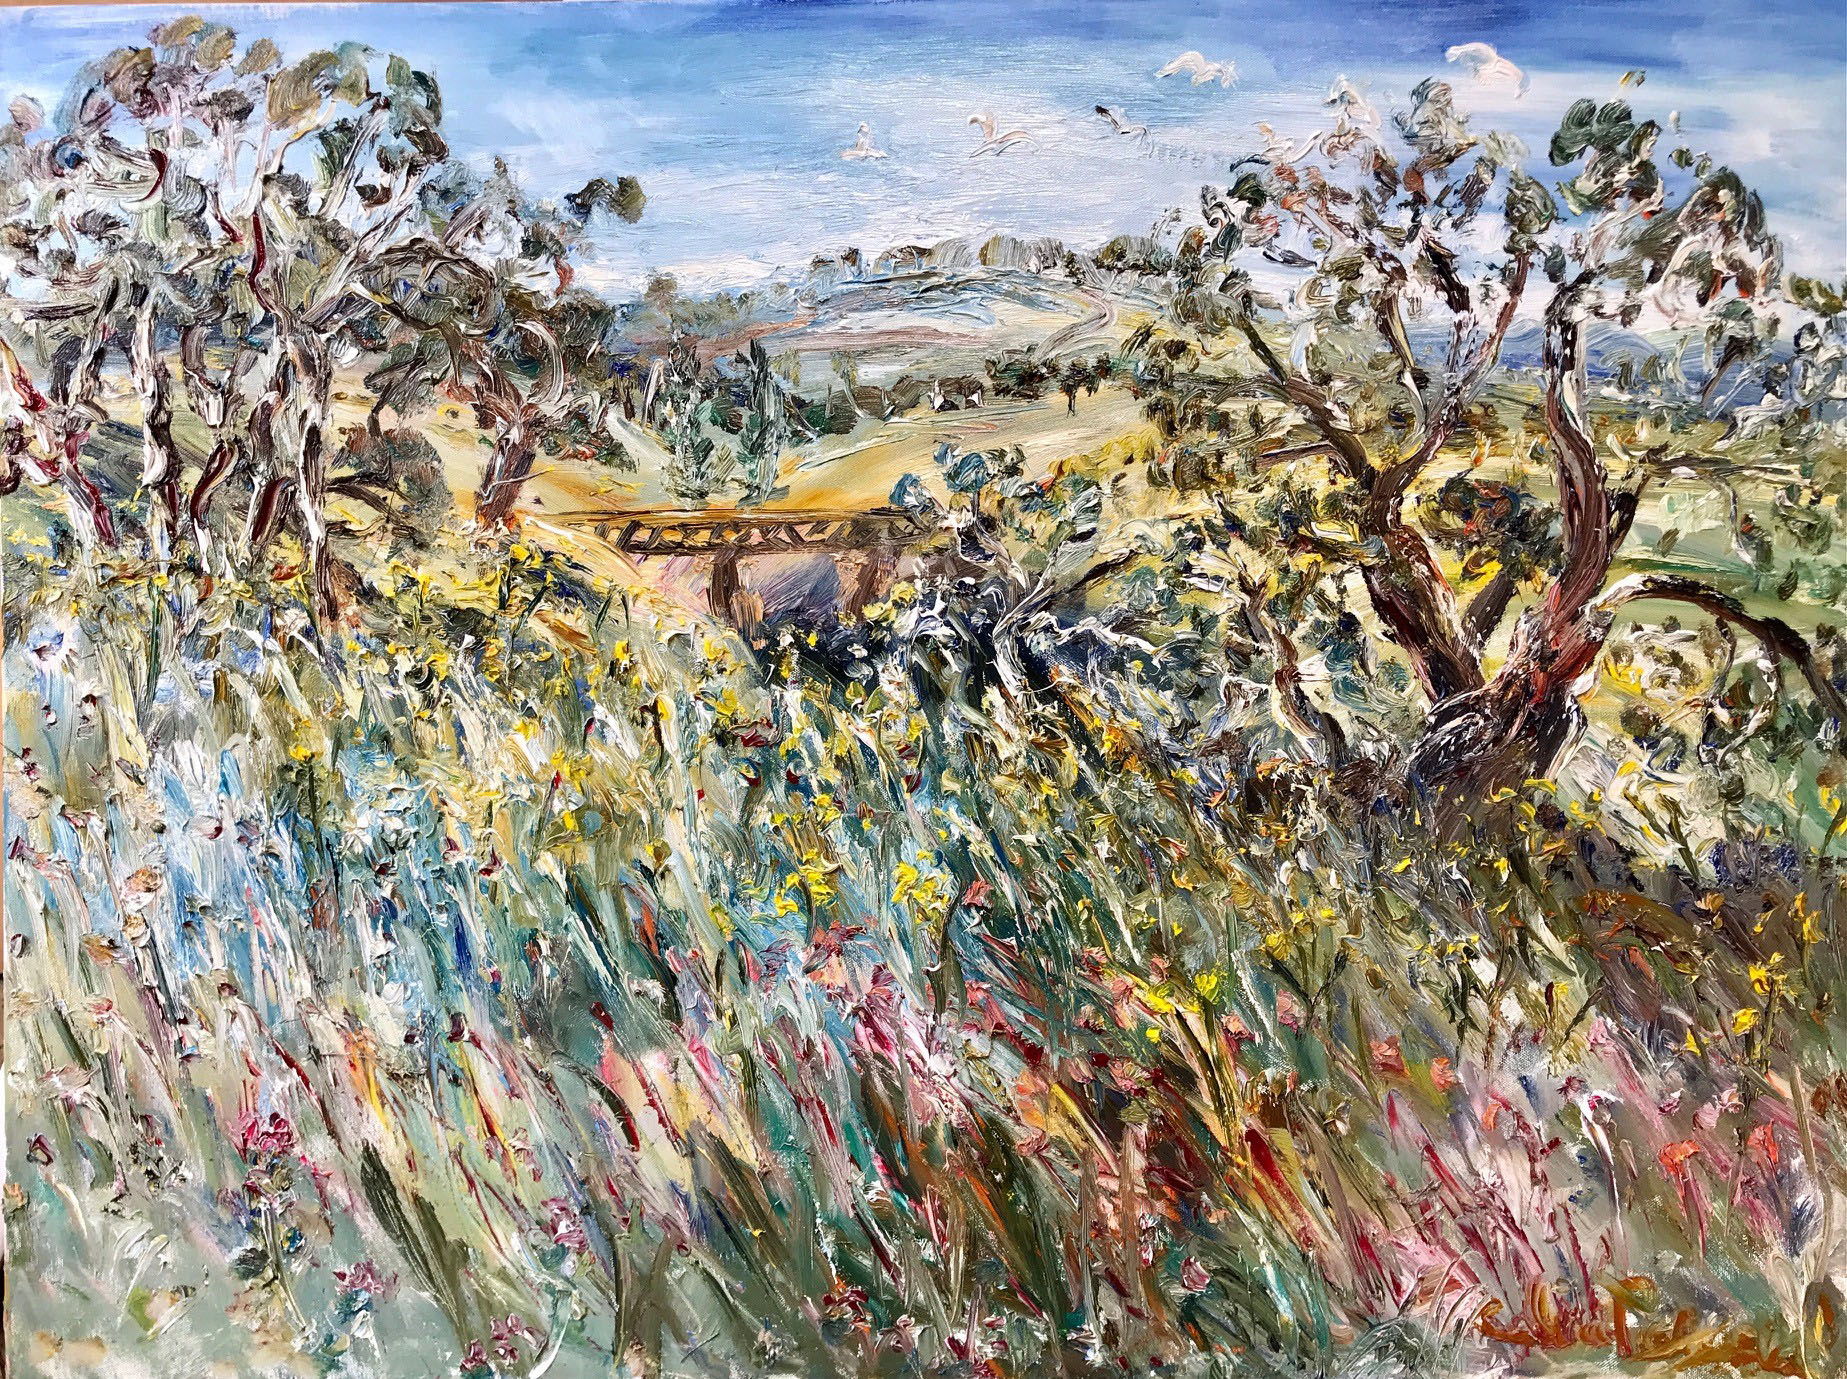 Celia Perceval 'Old Railway Bridge and Yellow Wildflowers' oil on canvas 72 x 102cm $15,800